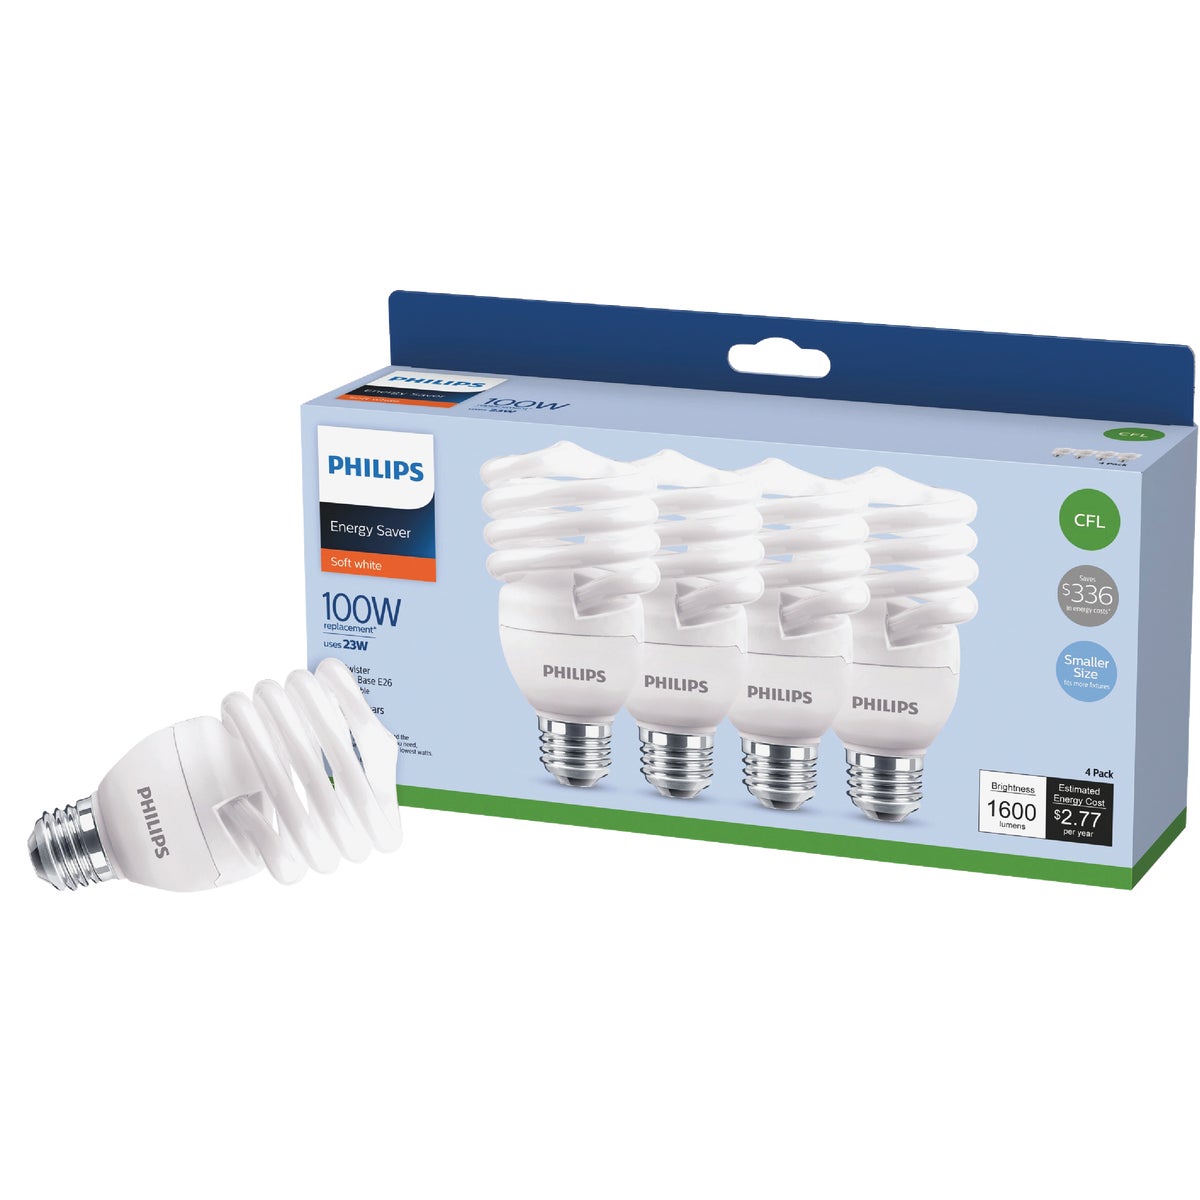 Philips Energy Saver 100W Equivalent Soft White Medium Base T2 Spiral CFL Light Bulb (4-Pack)